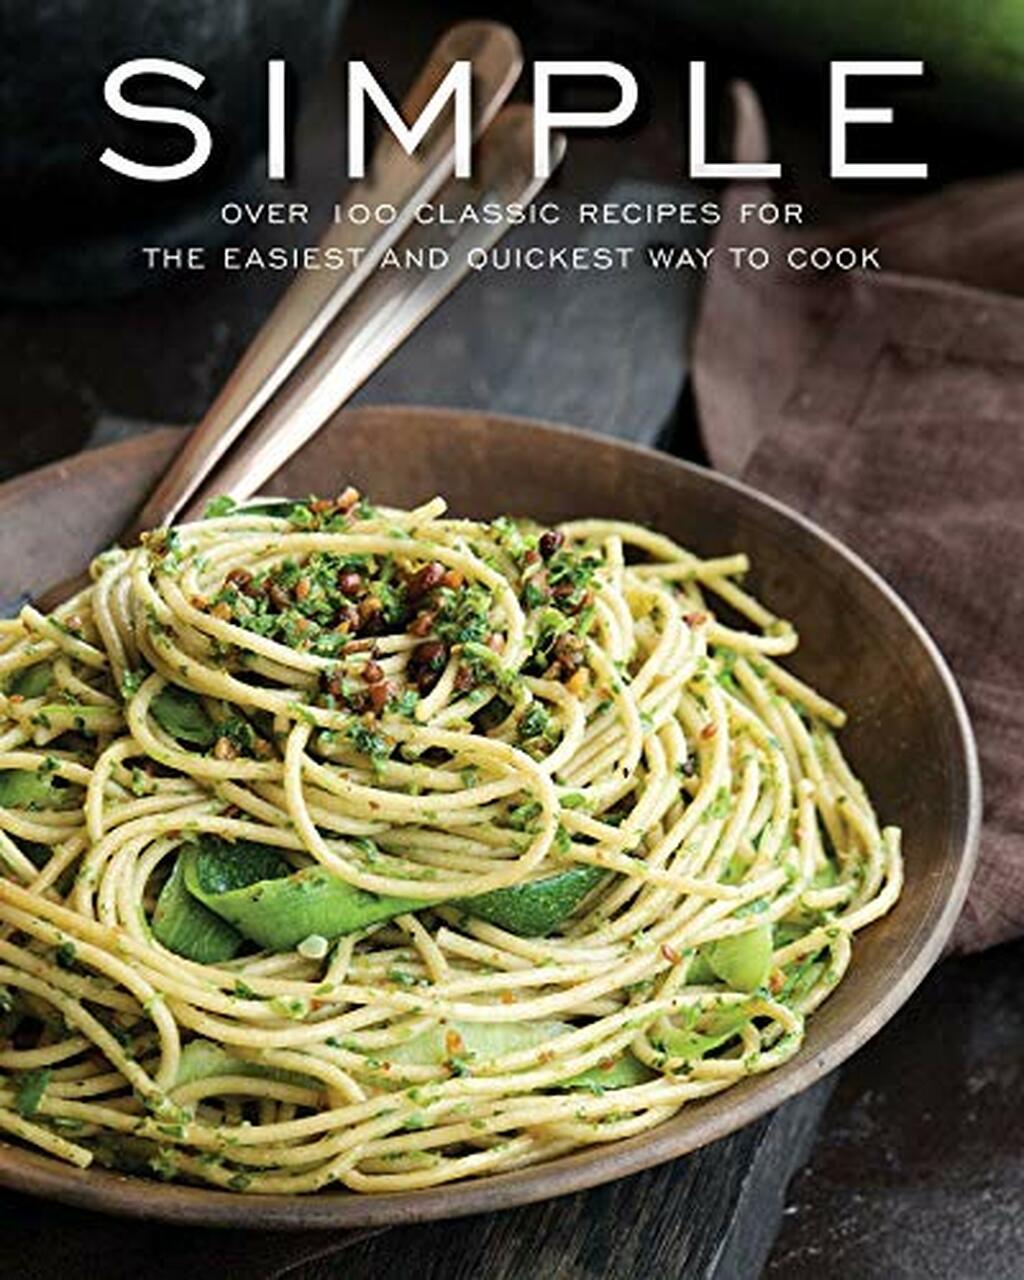 The Simple Cookbook